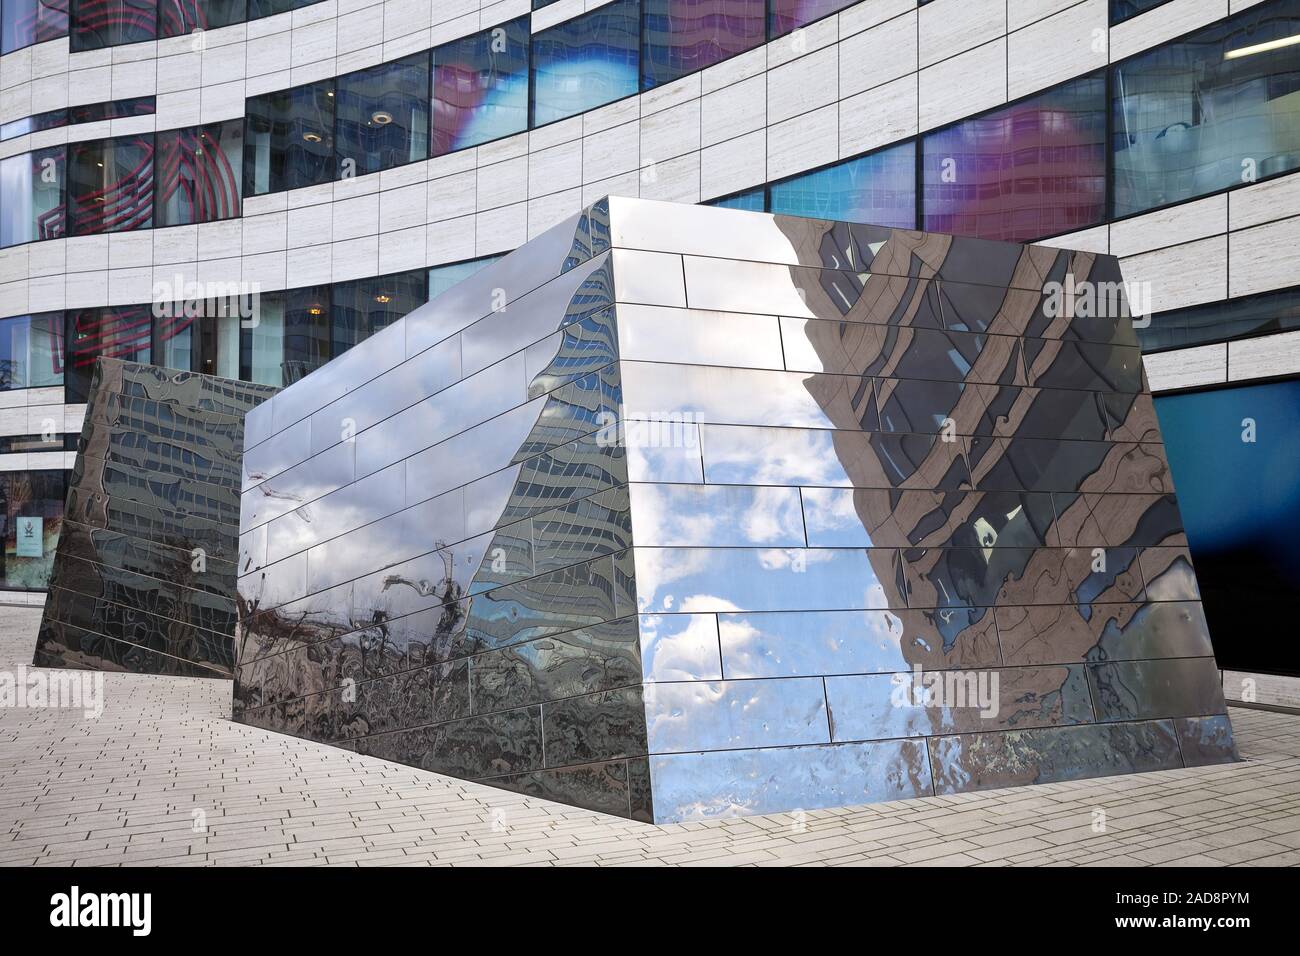 Koe-Bogen complexe du bâtiment par l'architecte Daniel Libeskind, Duesseldorf, Germamay, Europe Banque D'Images